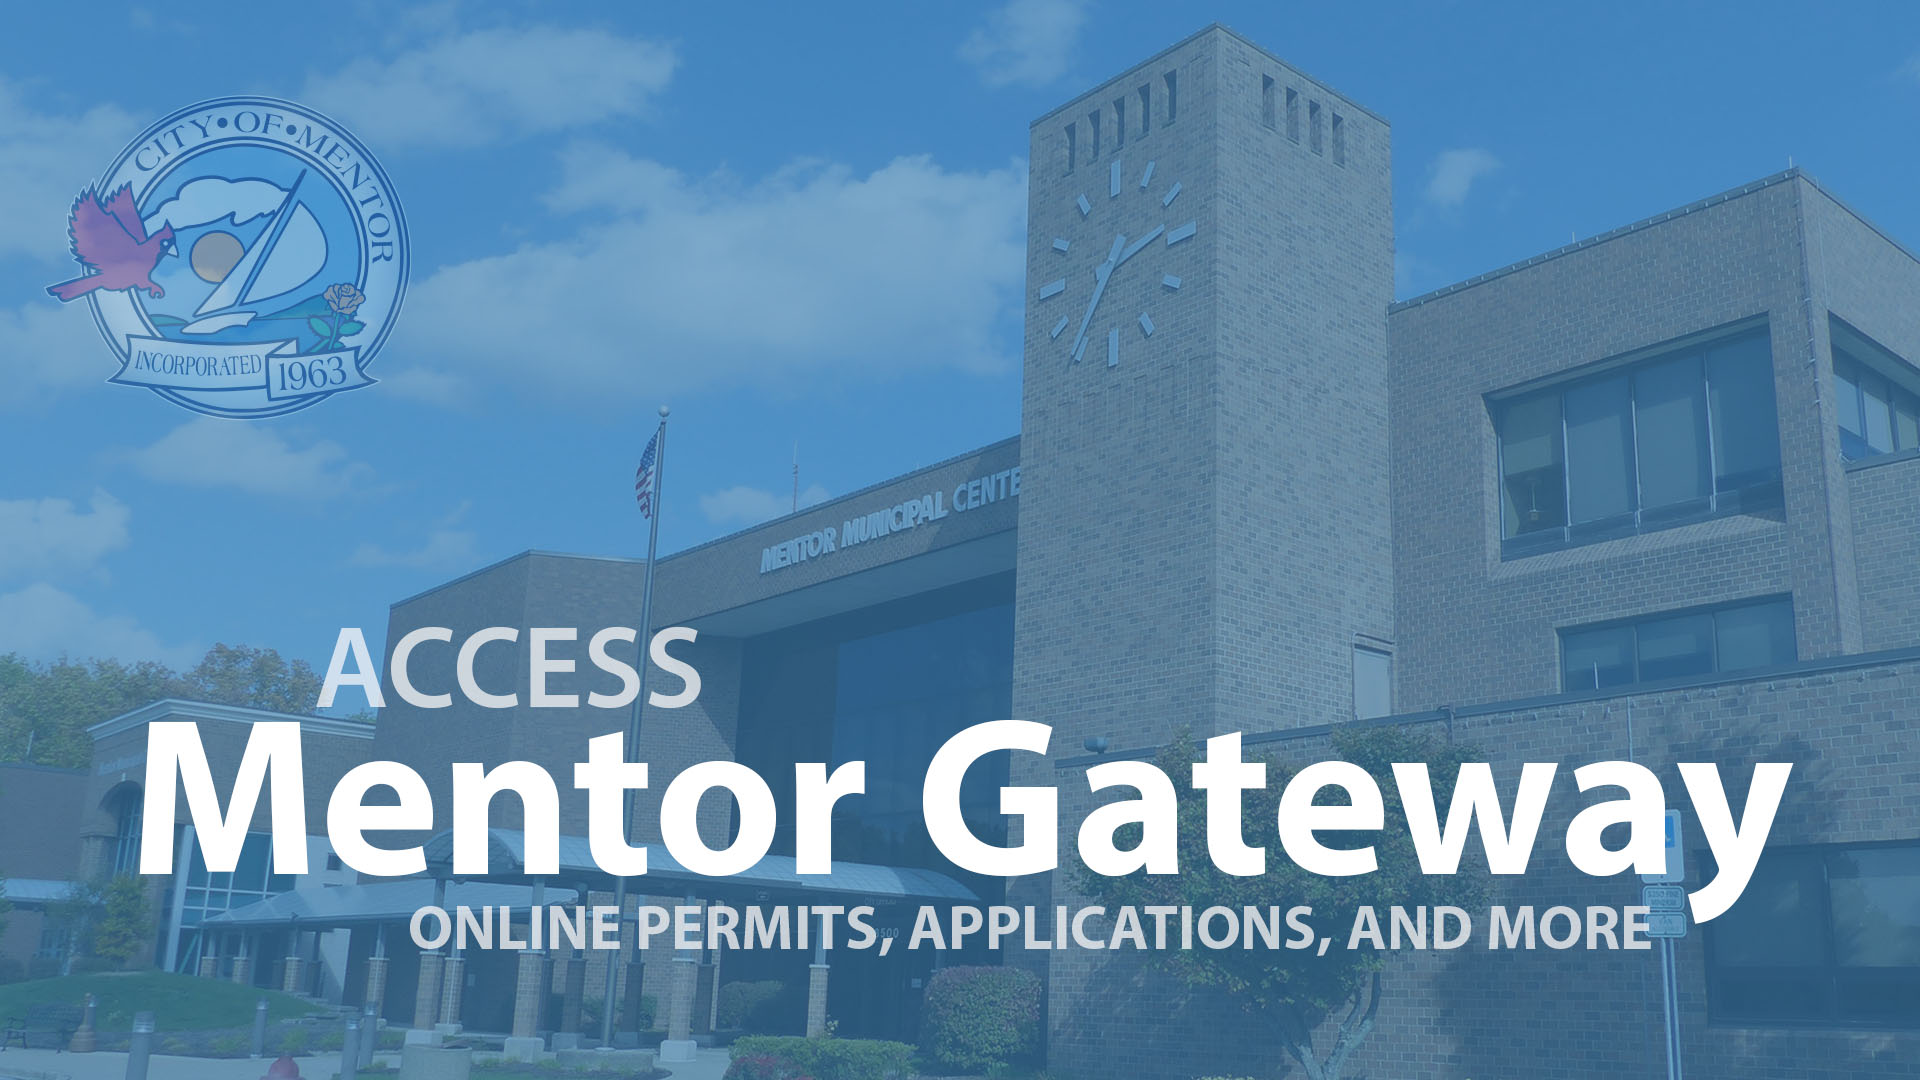 The Mentor Gateway